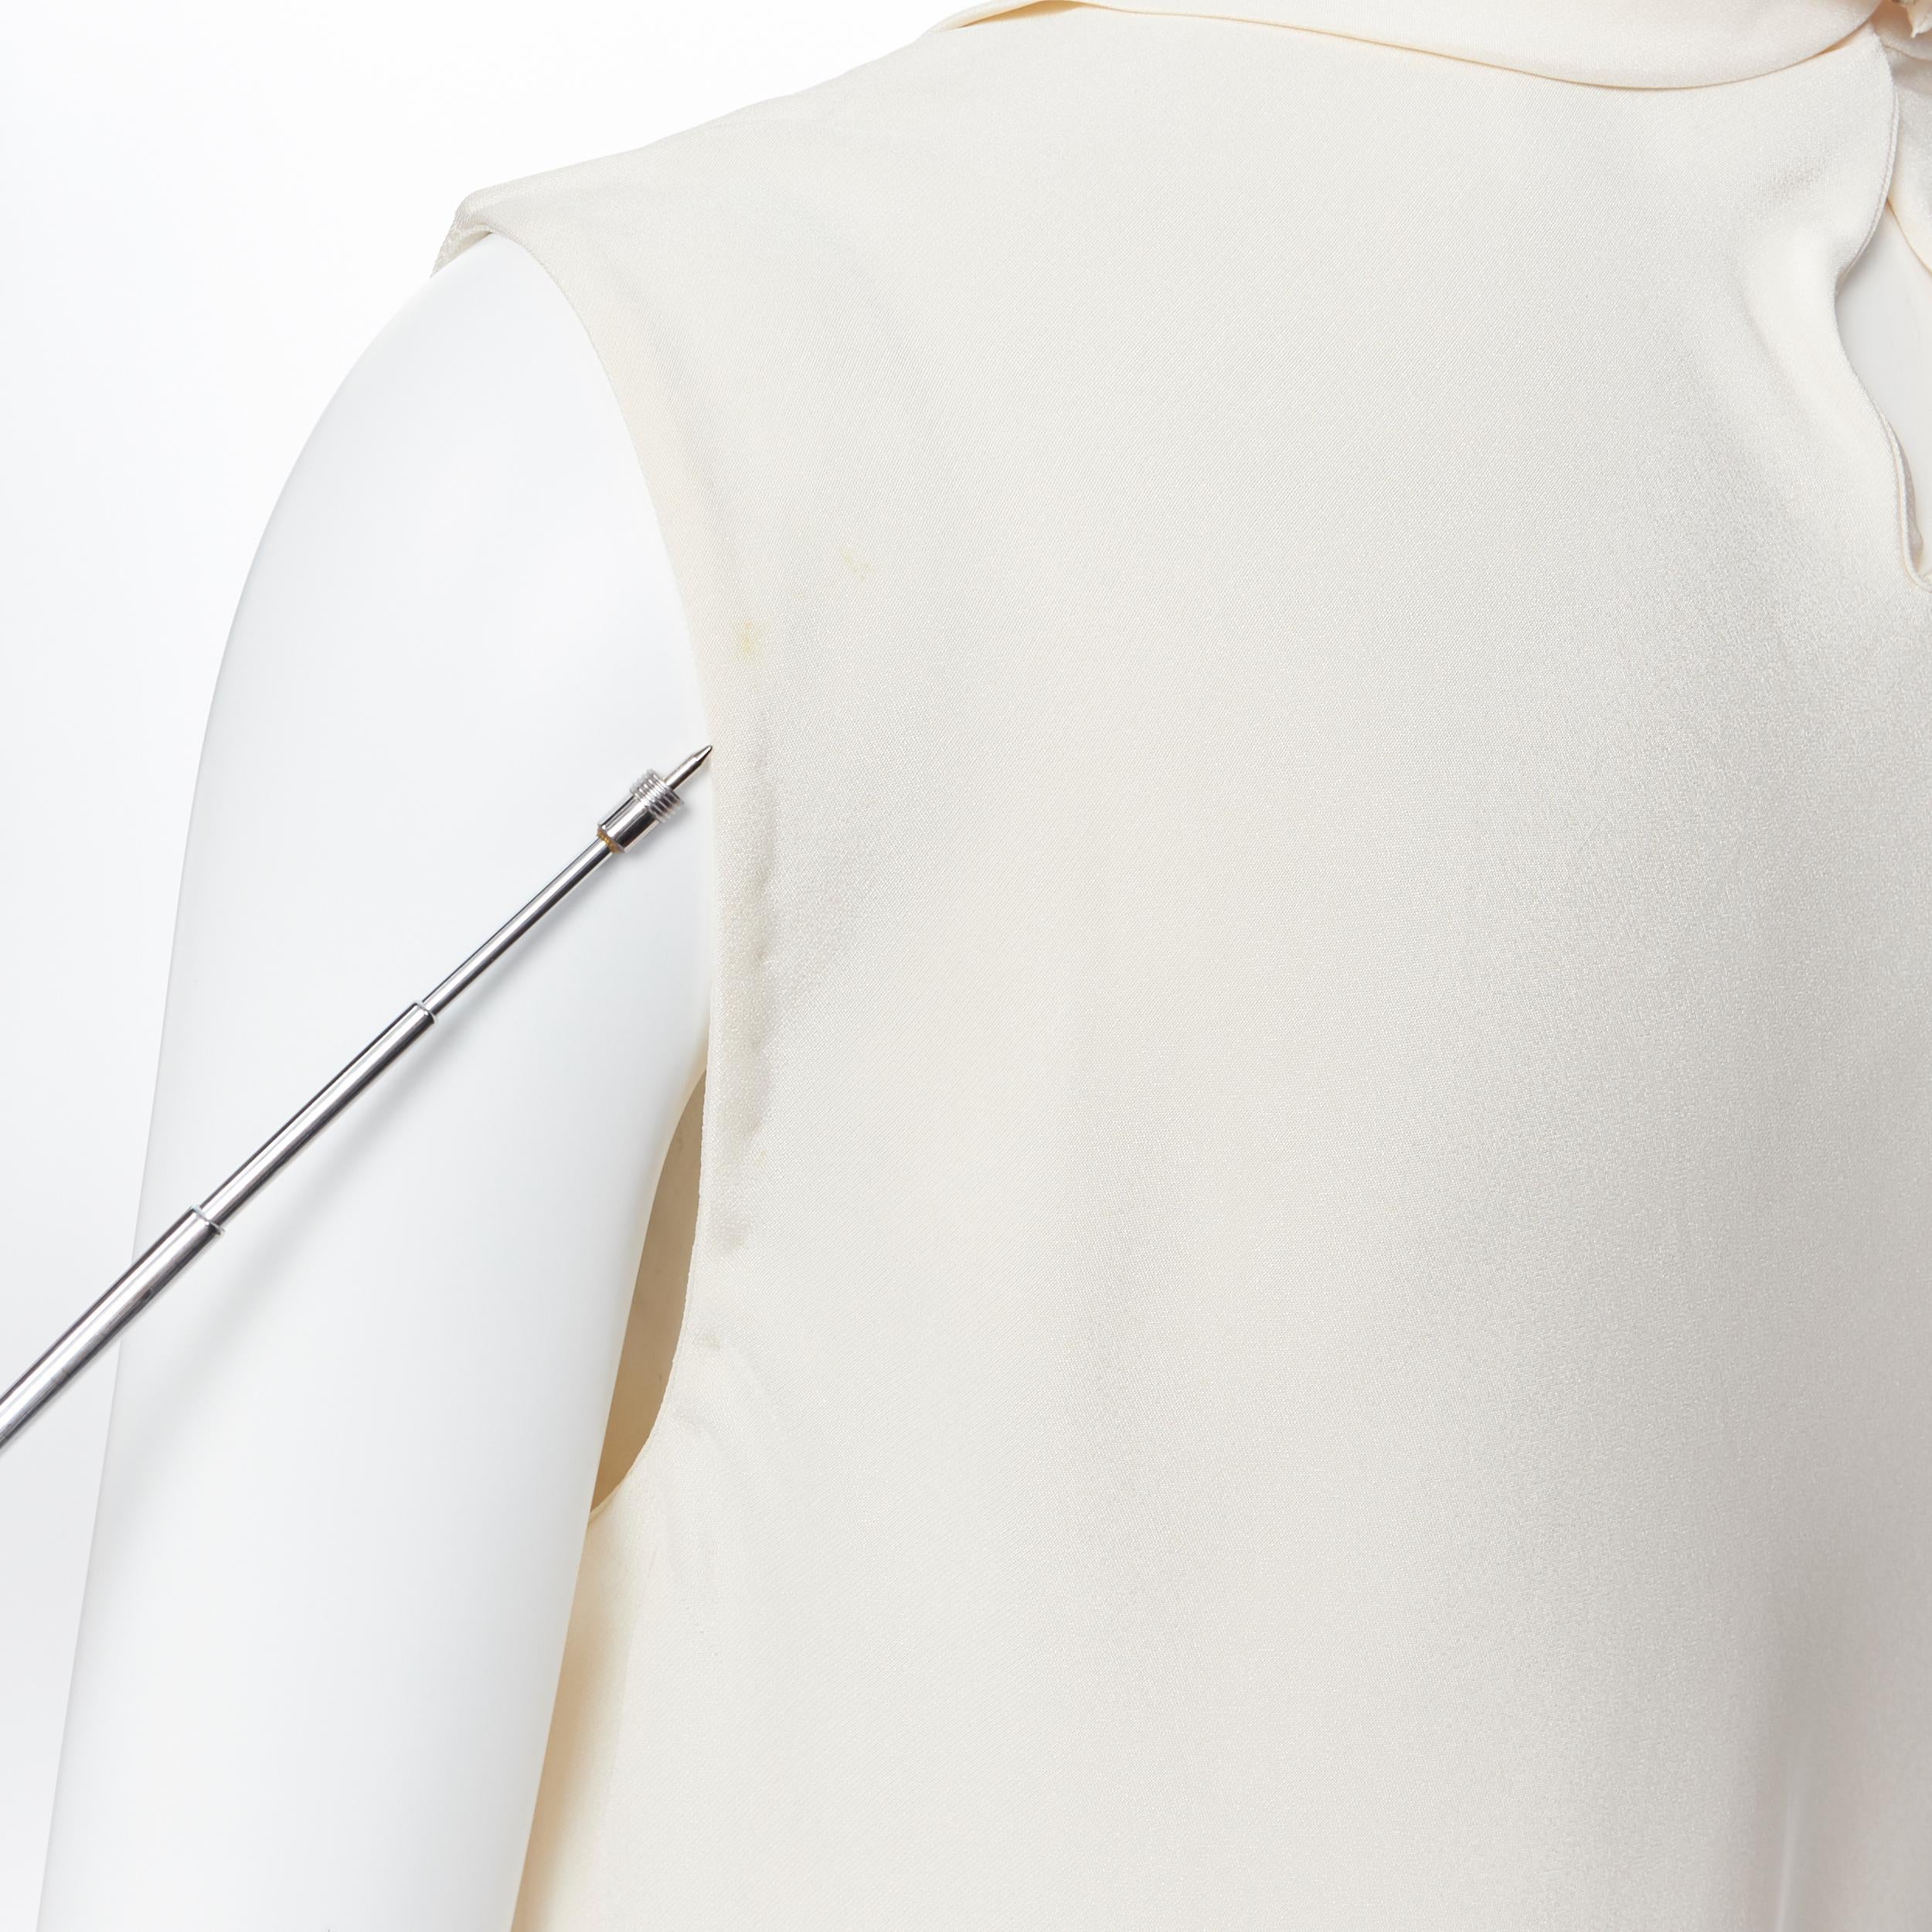 OSCAR DE LA RENTA R13 100% silk beige cream knot neckline sleeveless top US4 4